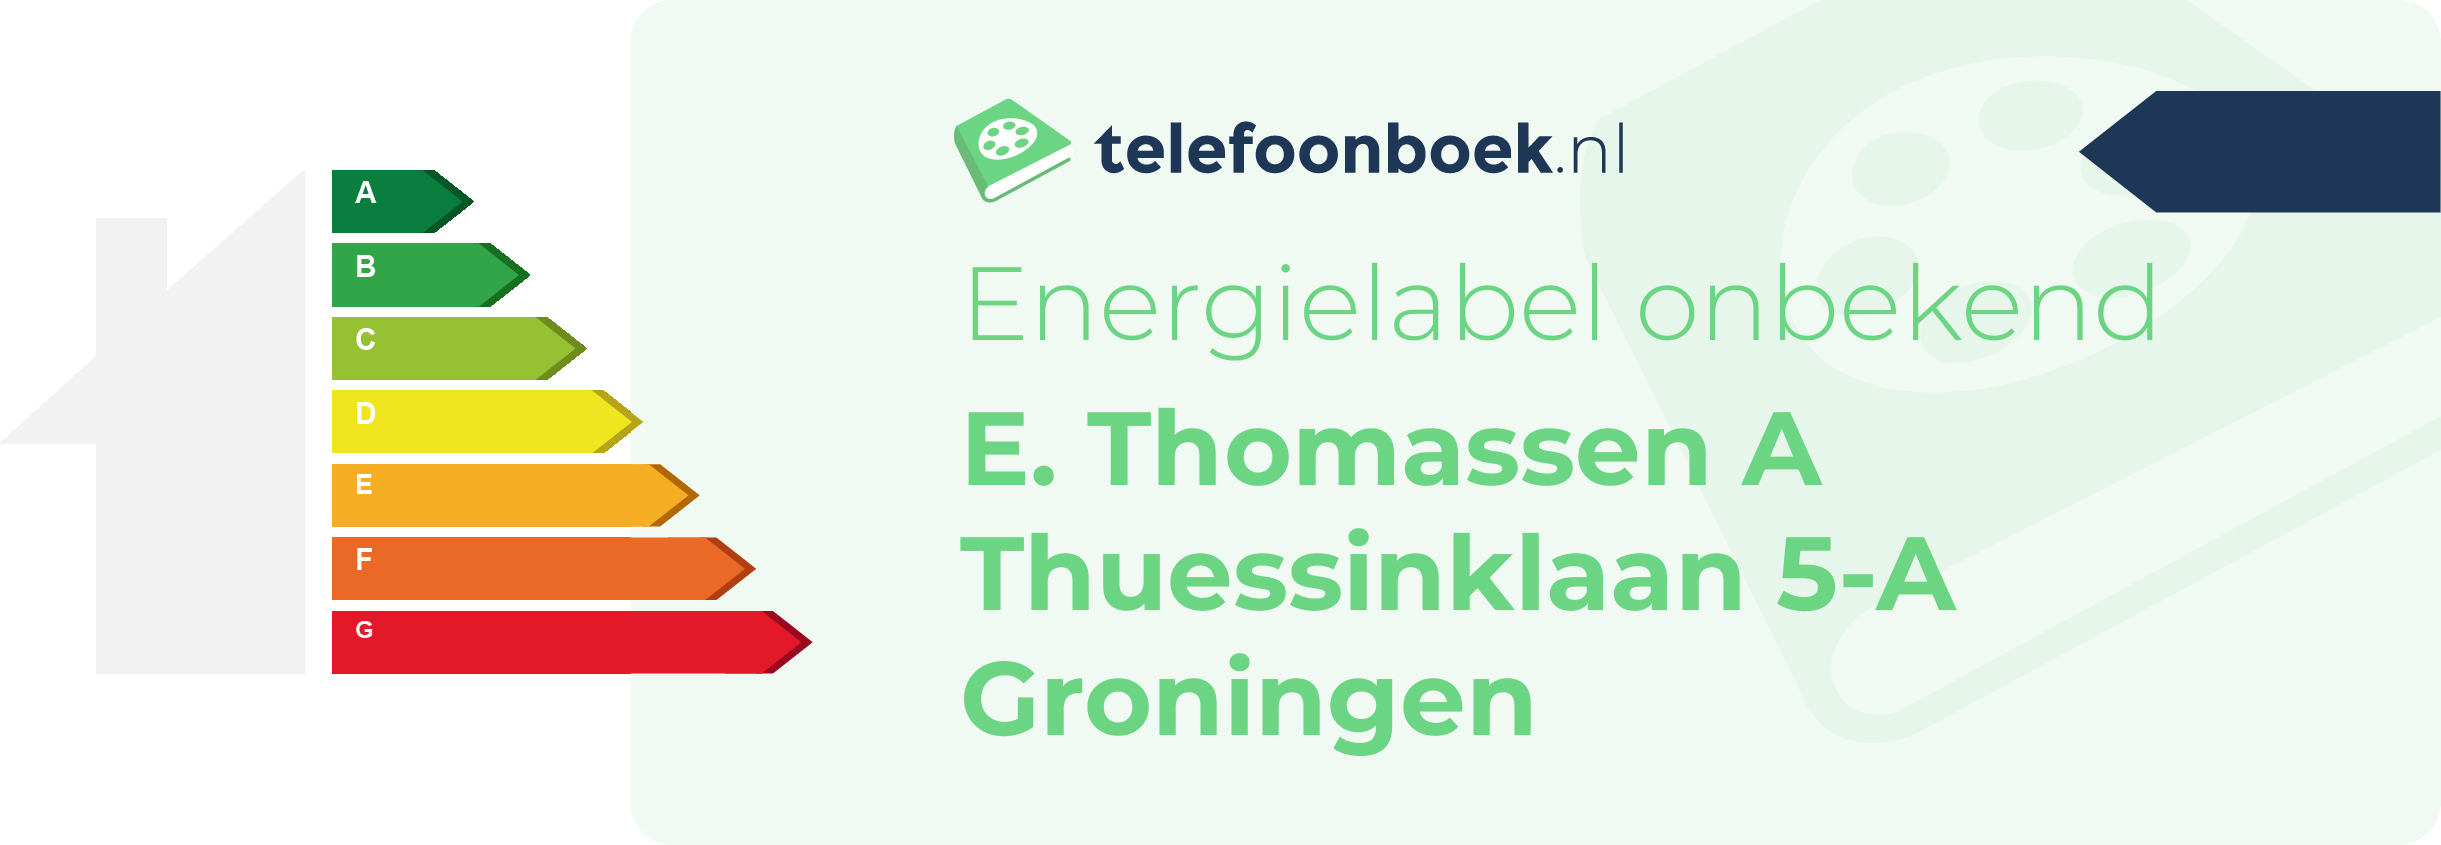 Energielabel E. Thomassen A Thuessinklaan 5-A Groningen